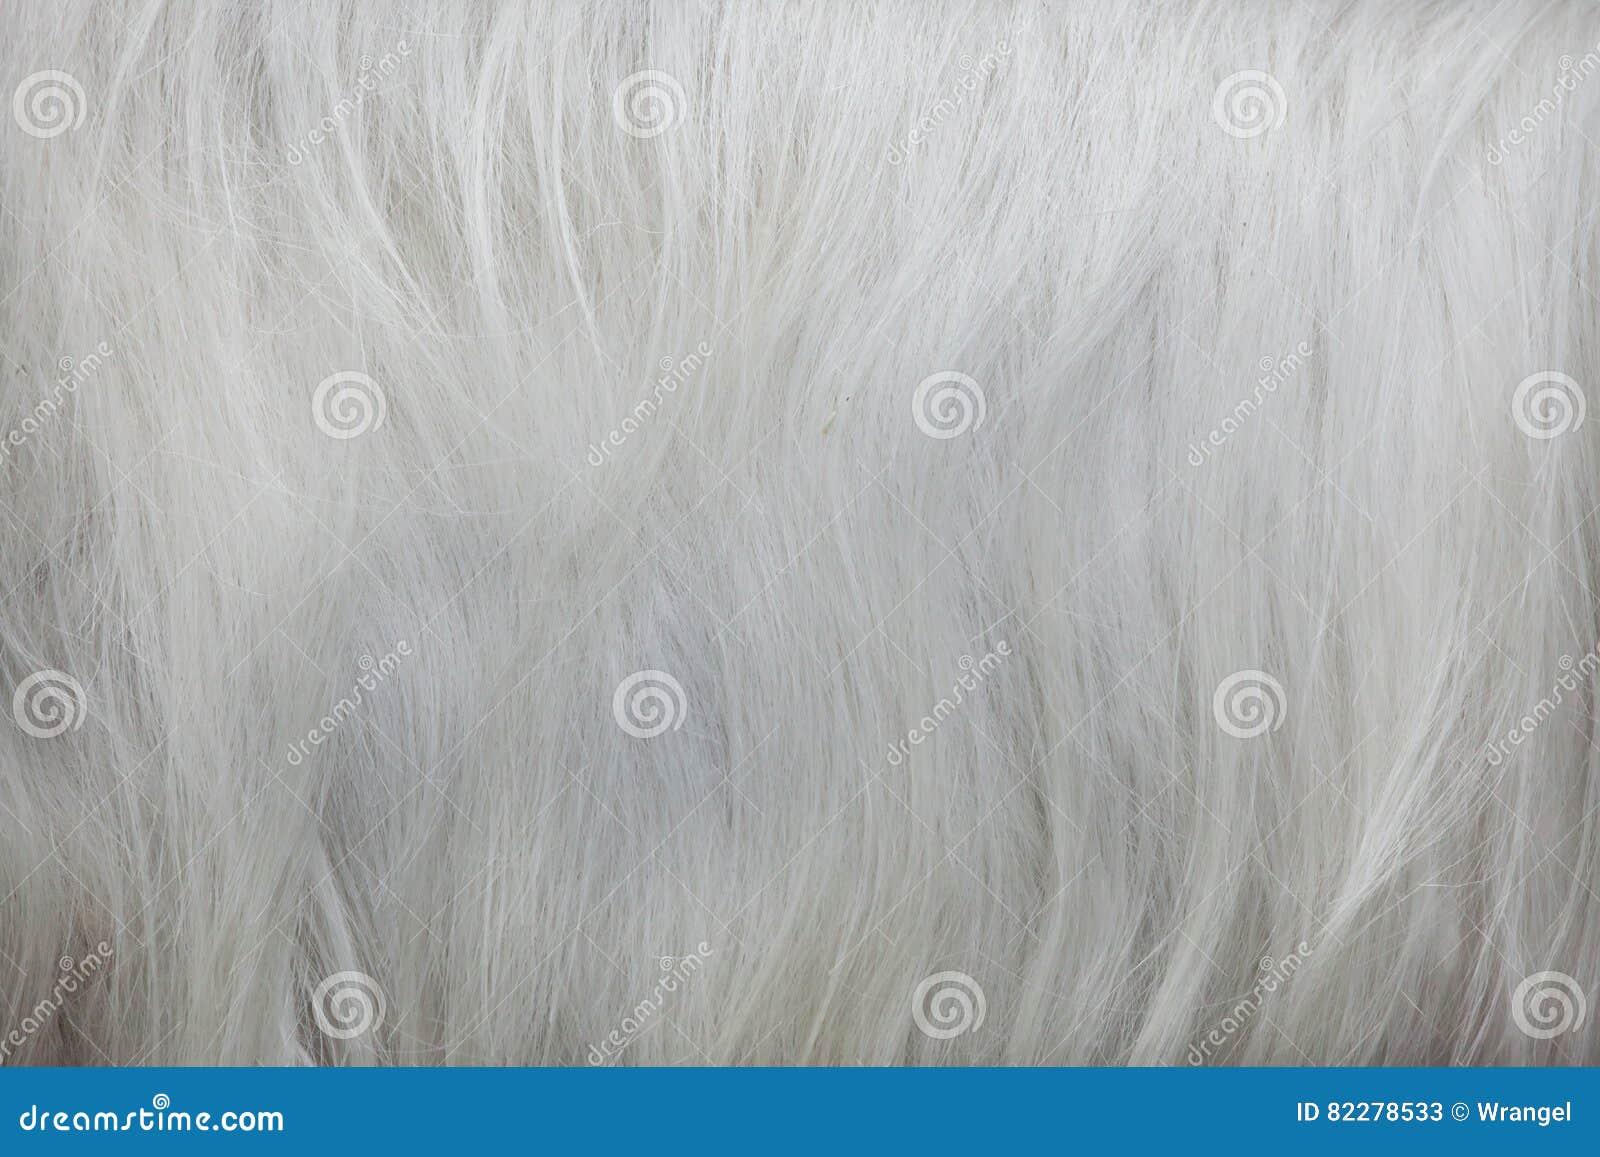 girgentana goat capra aegagrus hircus. fur texture